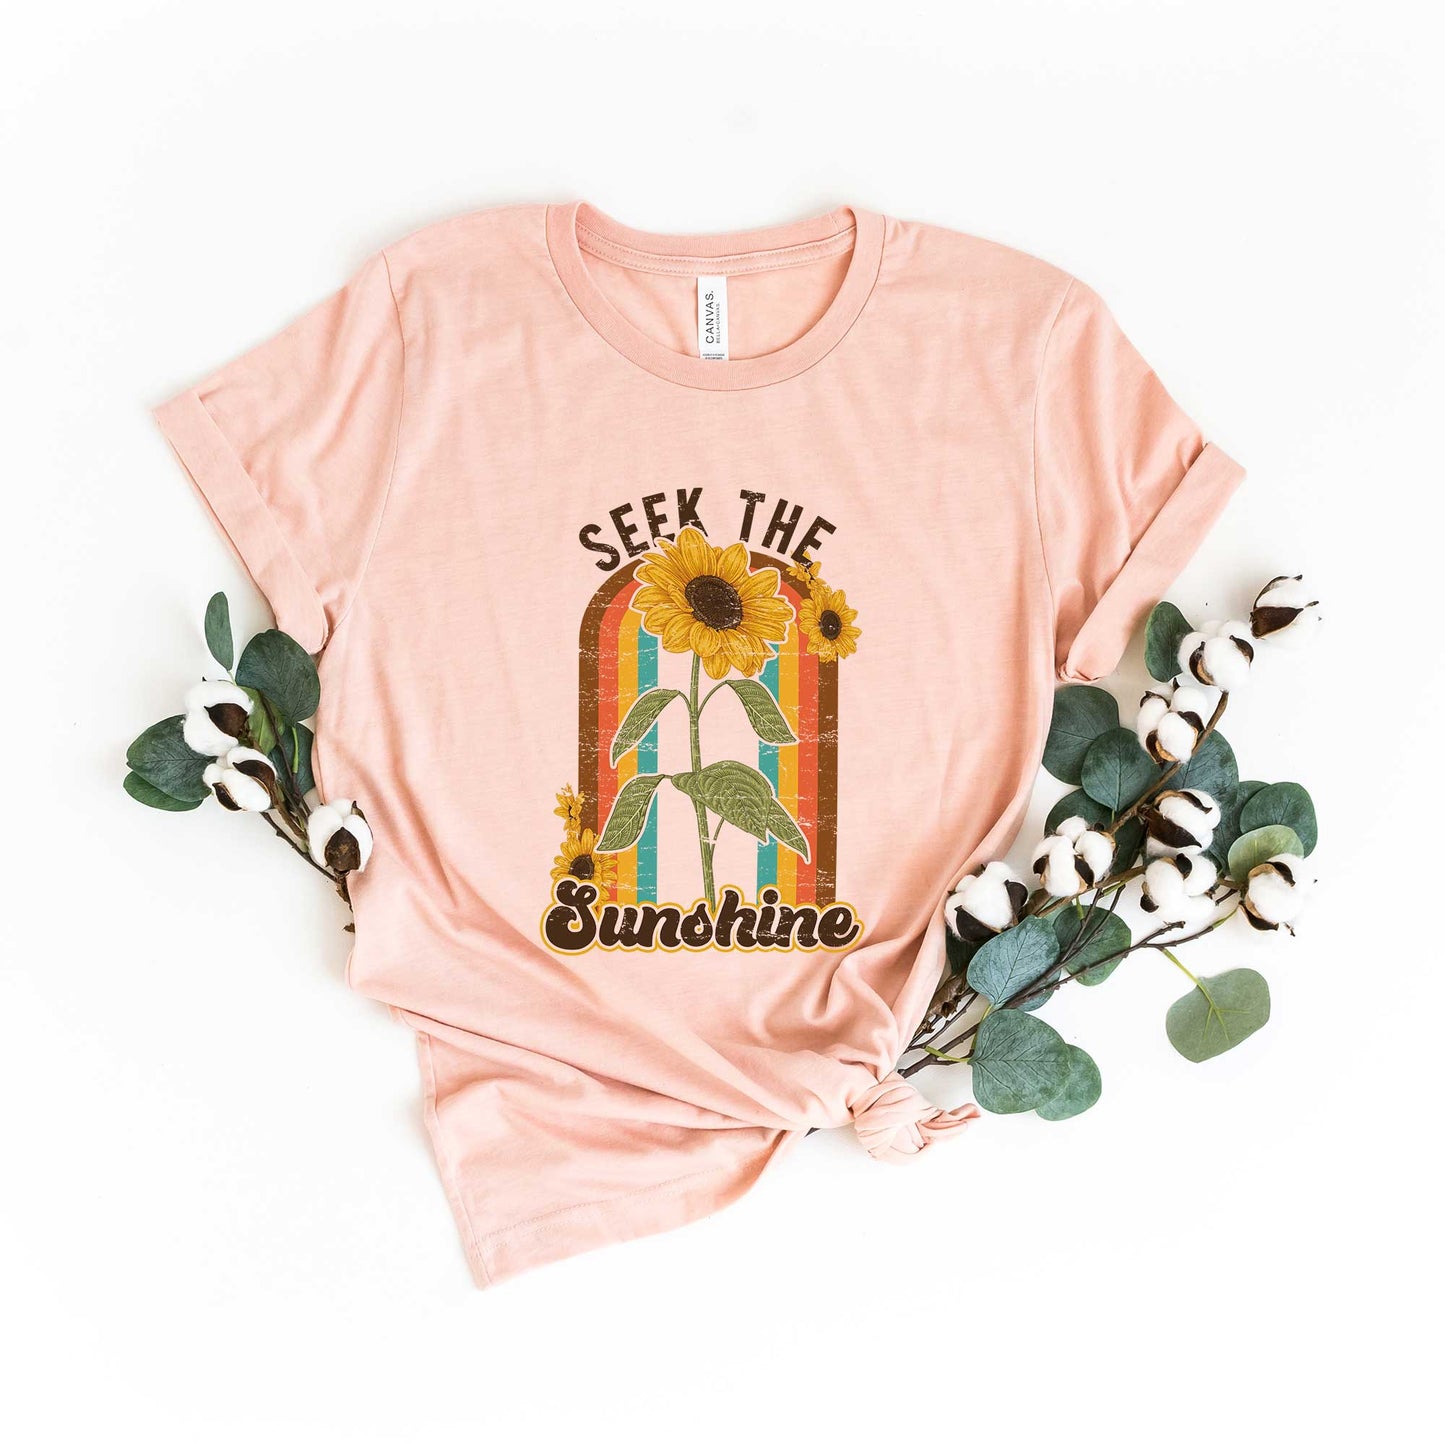 Seek The Sunshine | Short Sleeve Graphic Tee